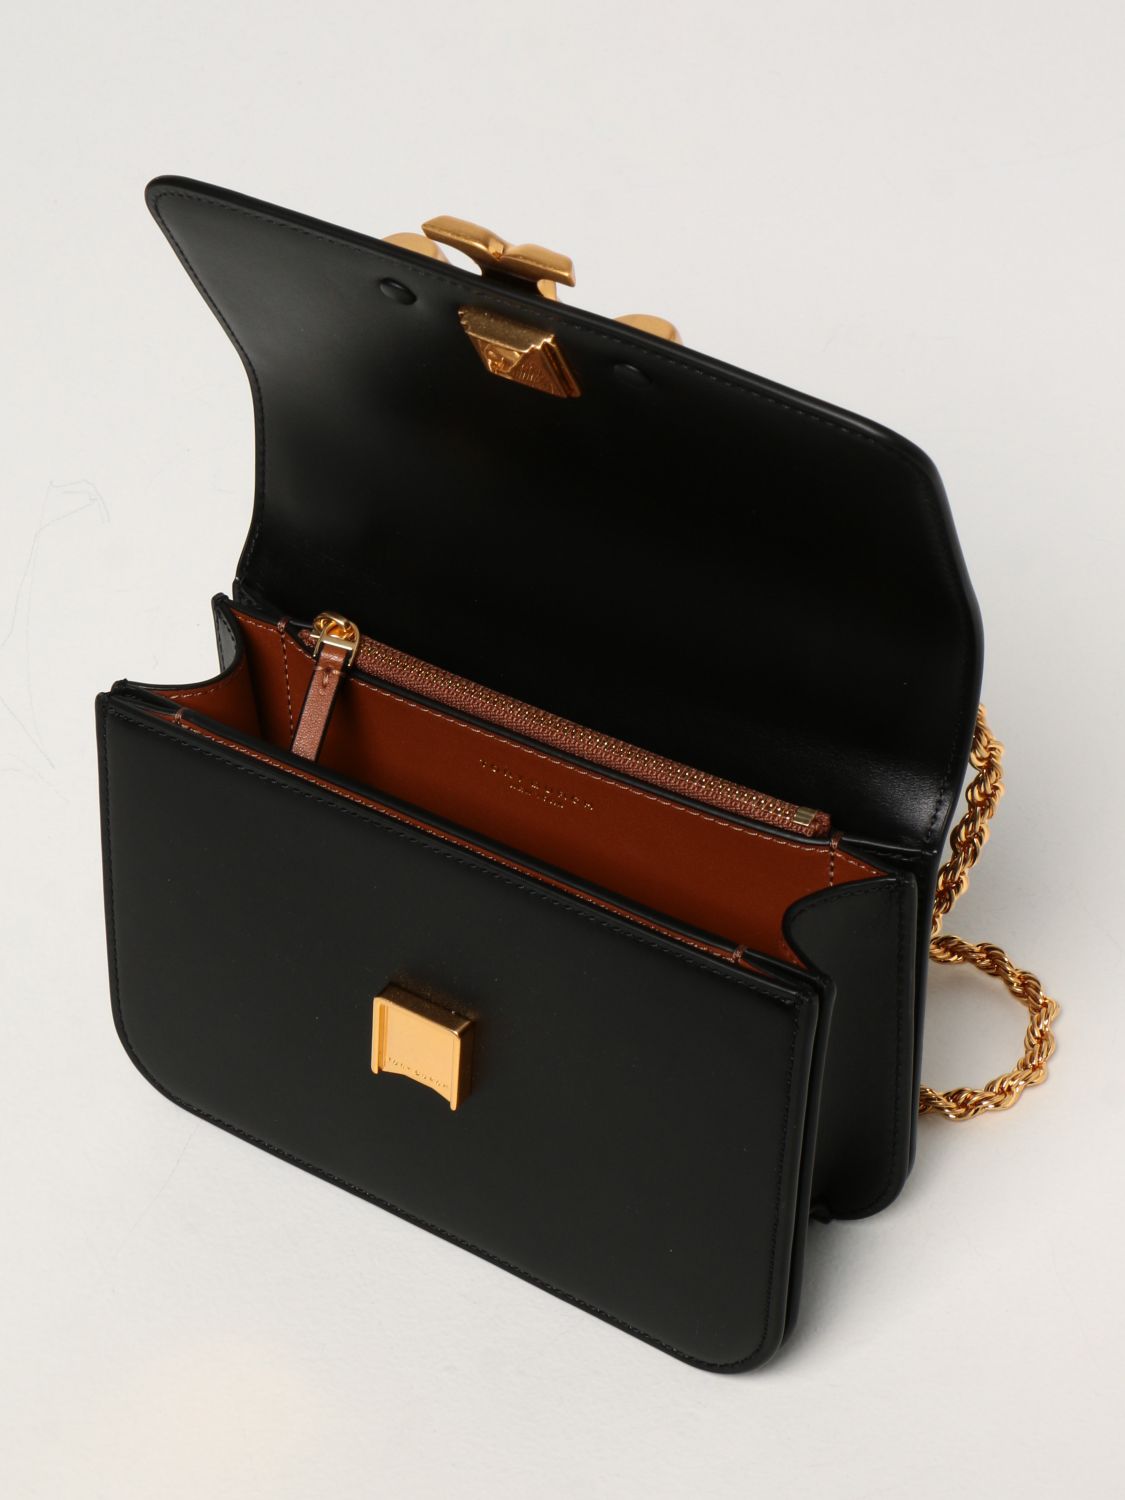 TORY BURCH: Eleanor leather bag - Black | Tory Burch crossbody bags 73589  online on 